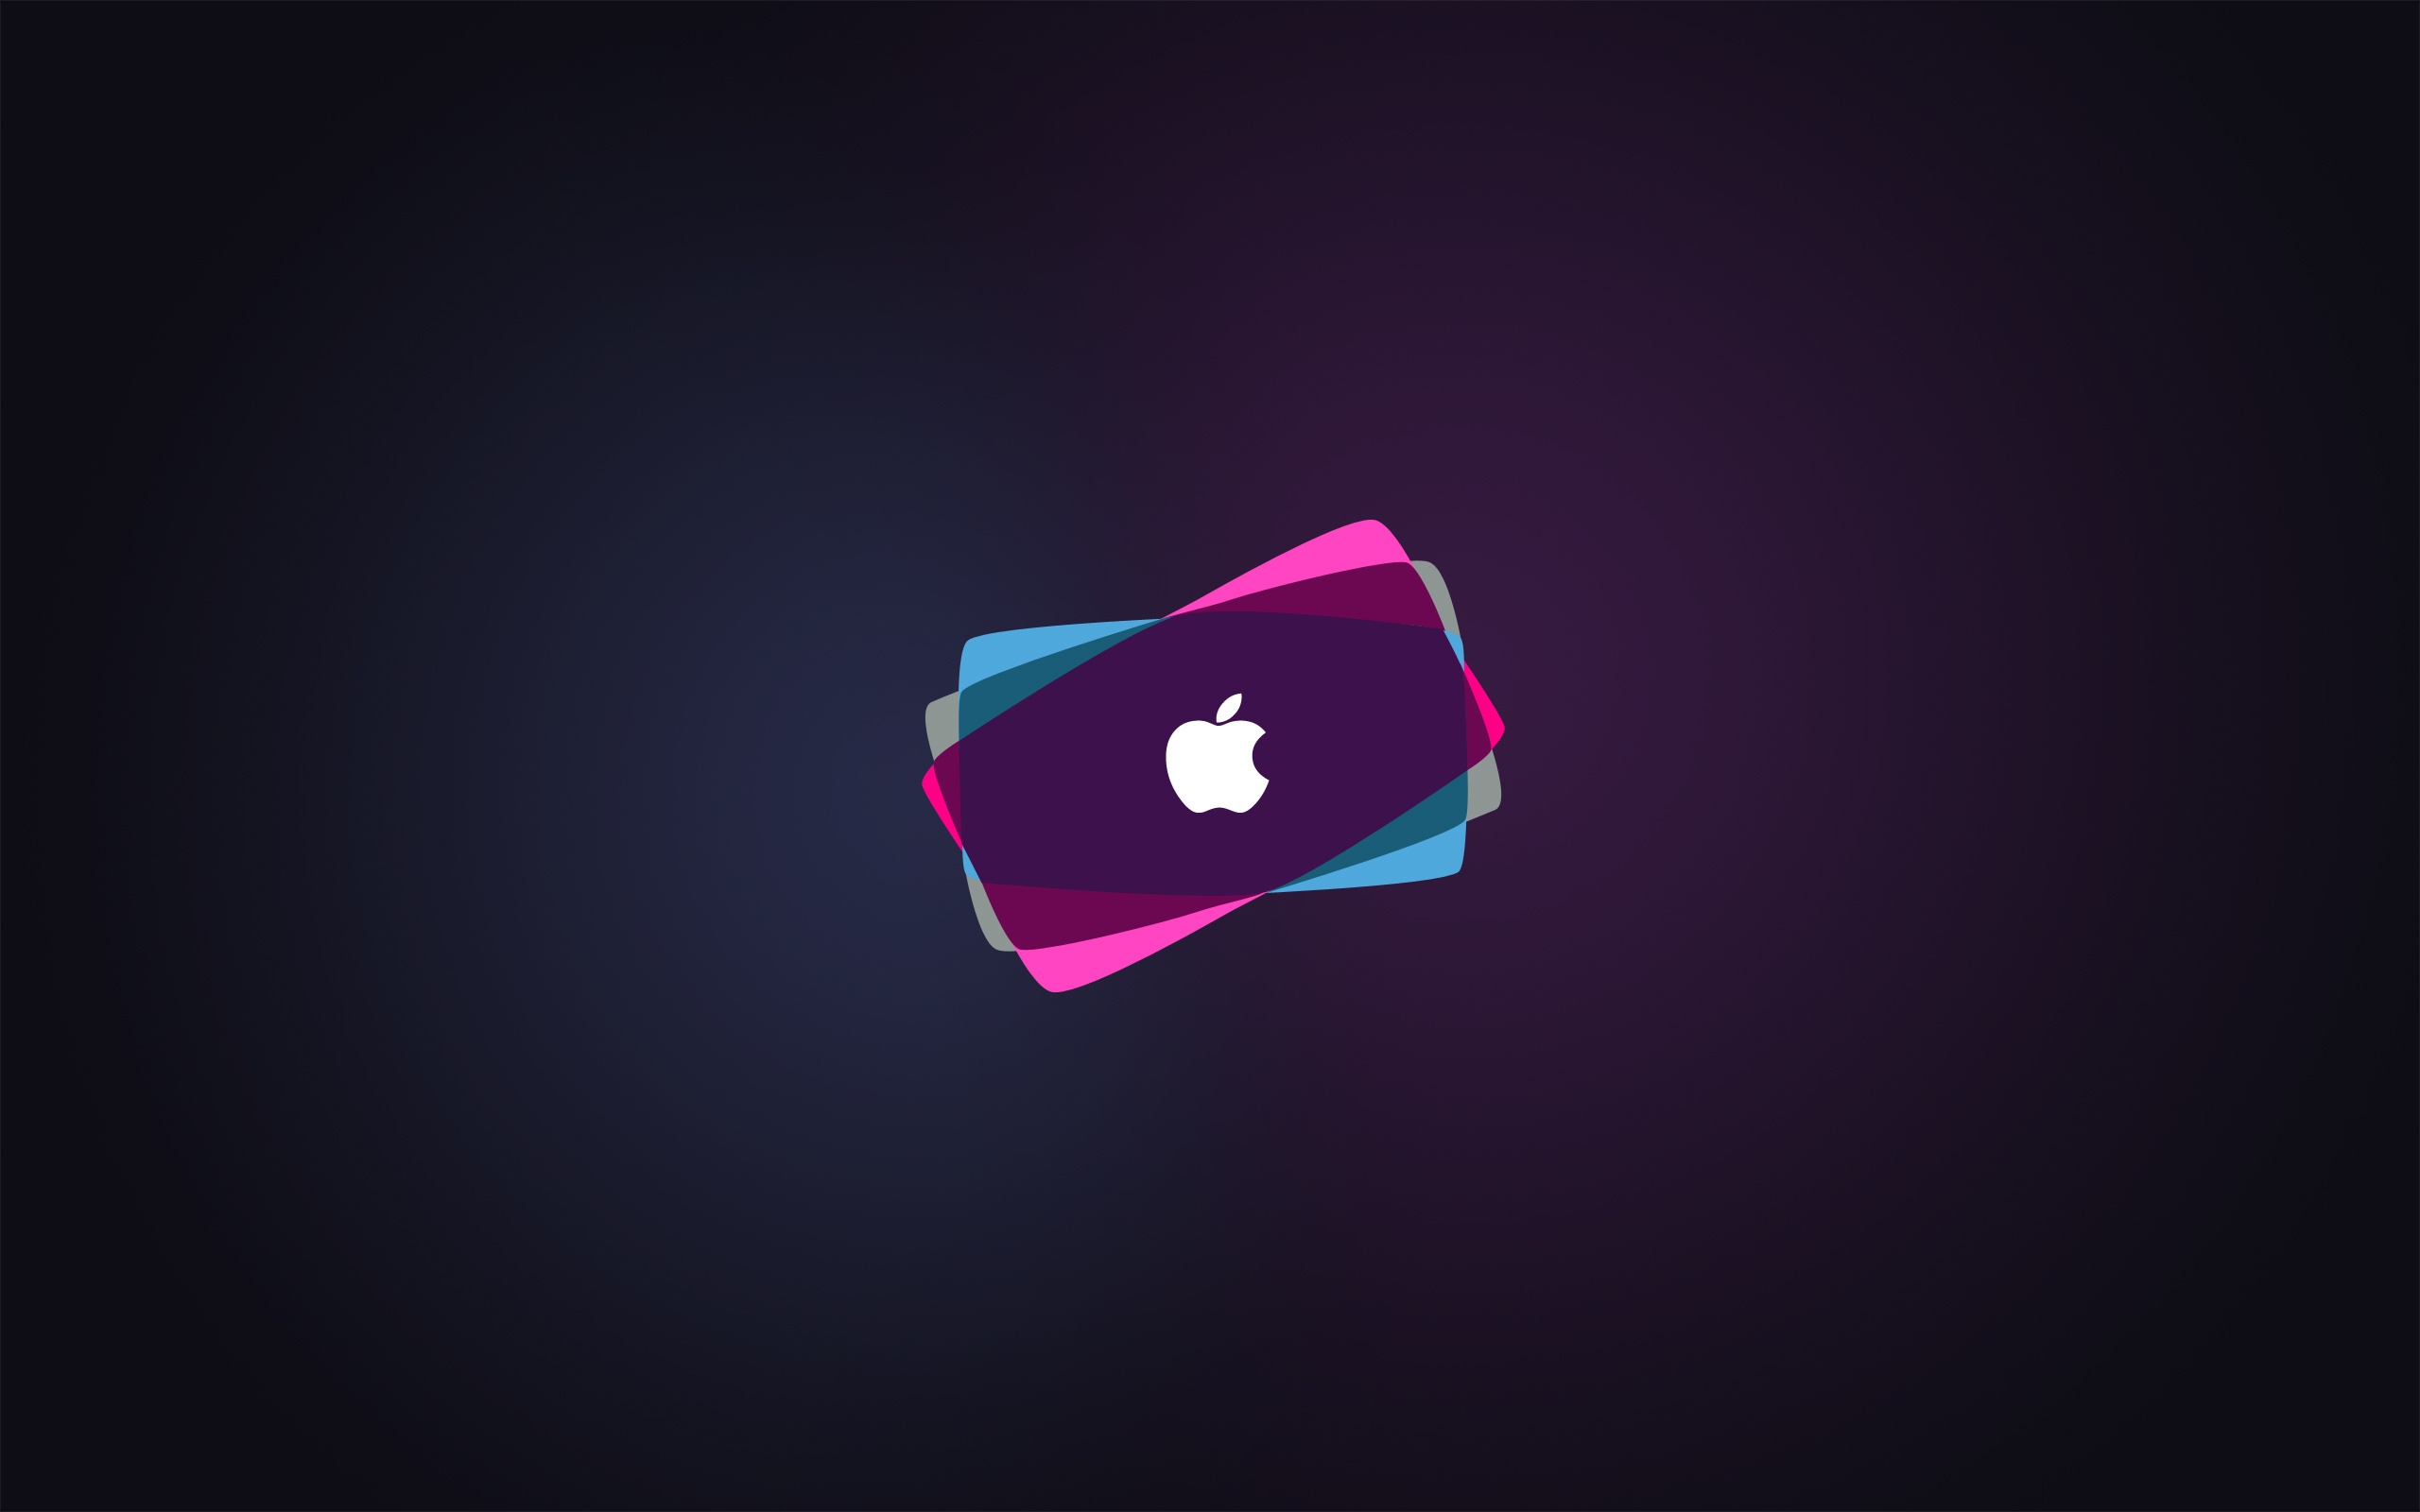  El origen del logo de Apple